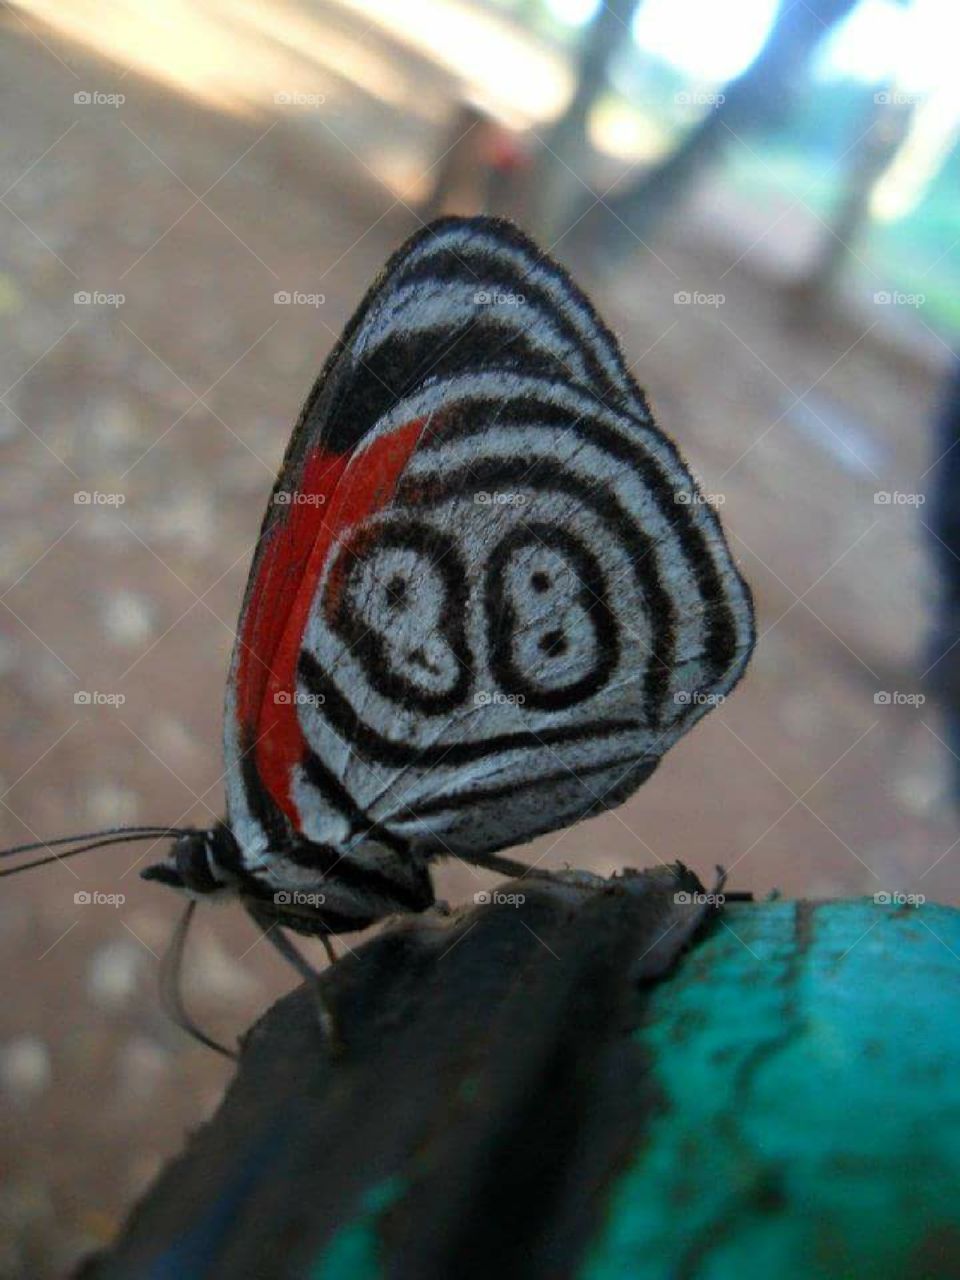 Brasilian butterflies